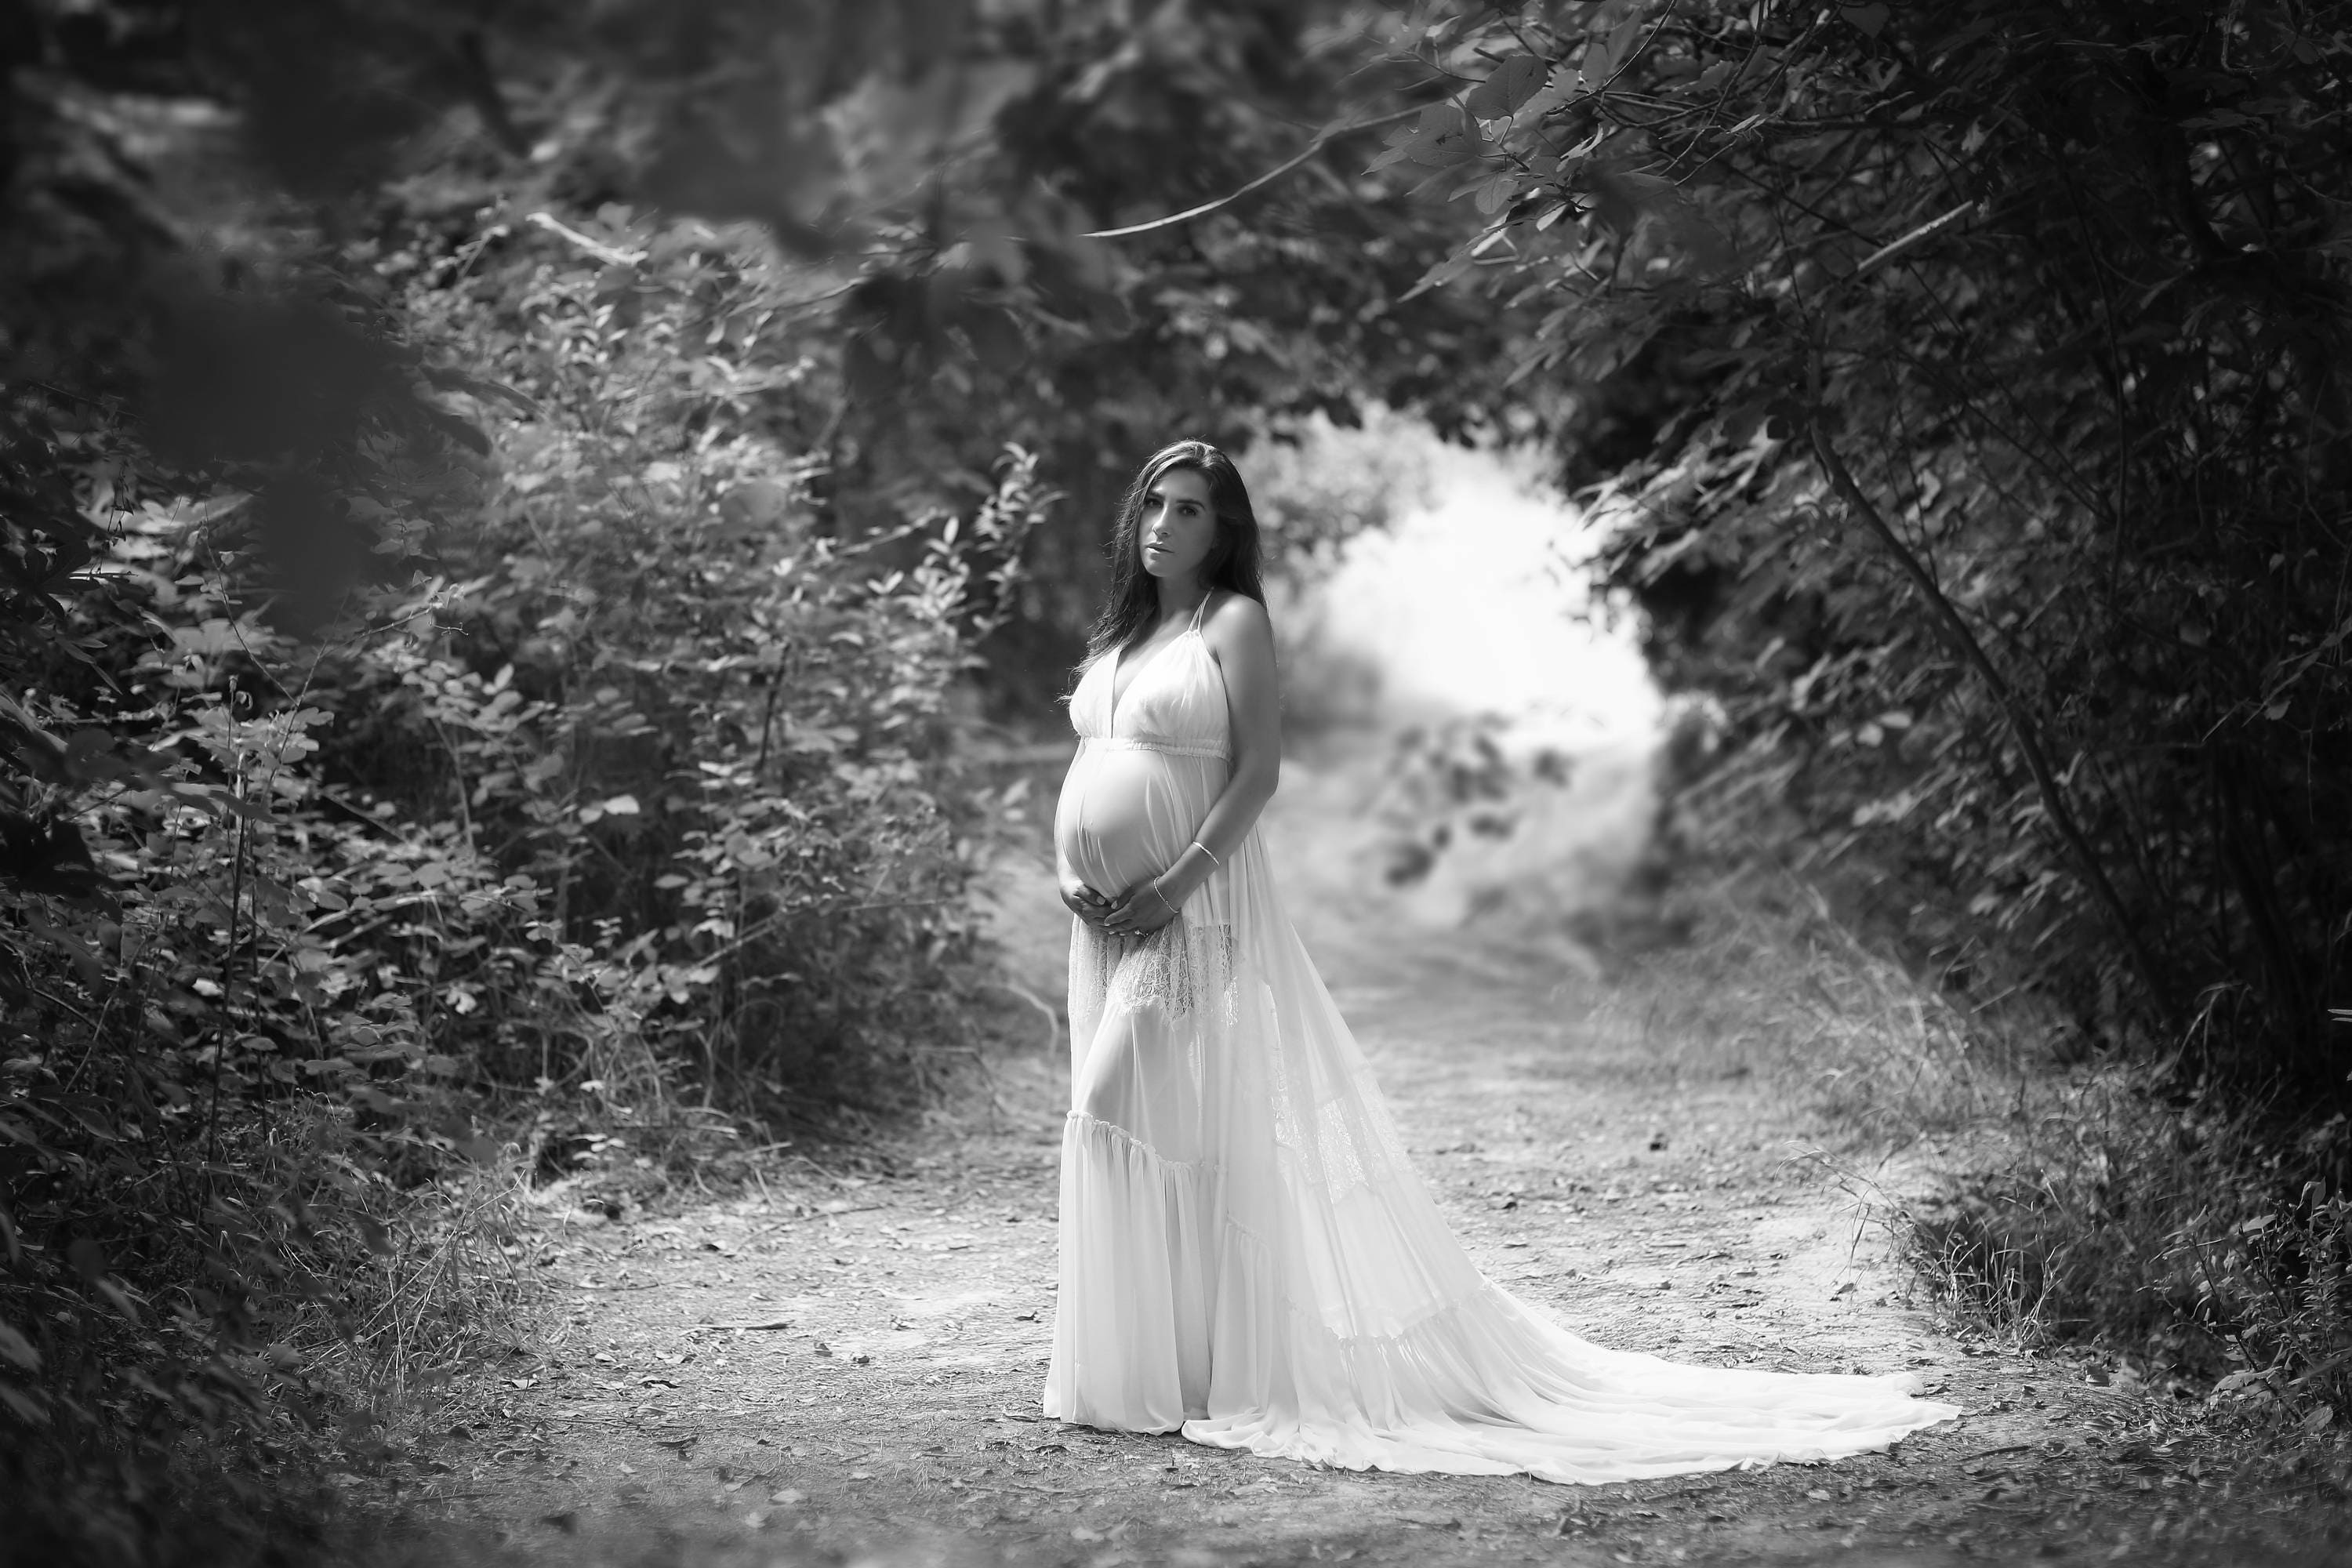 Baby Shower Dress White Maternity Dress photo shoot dress | Etsy